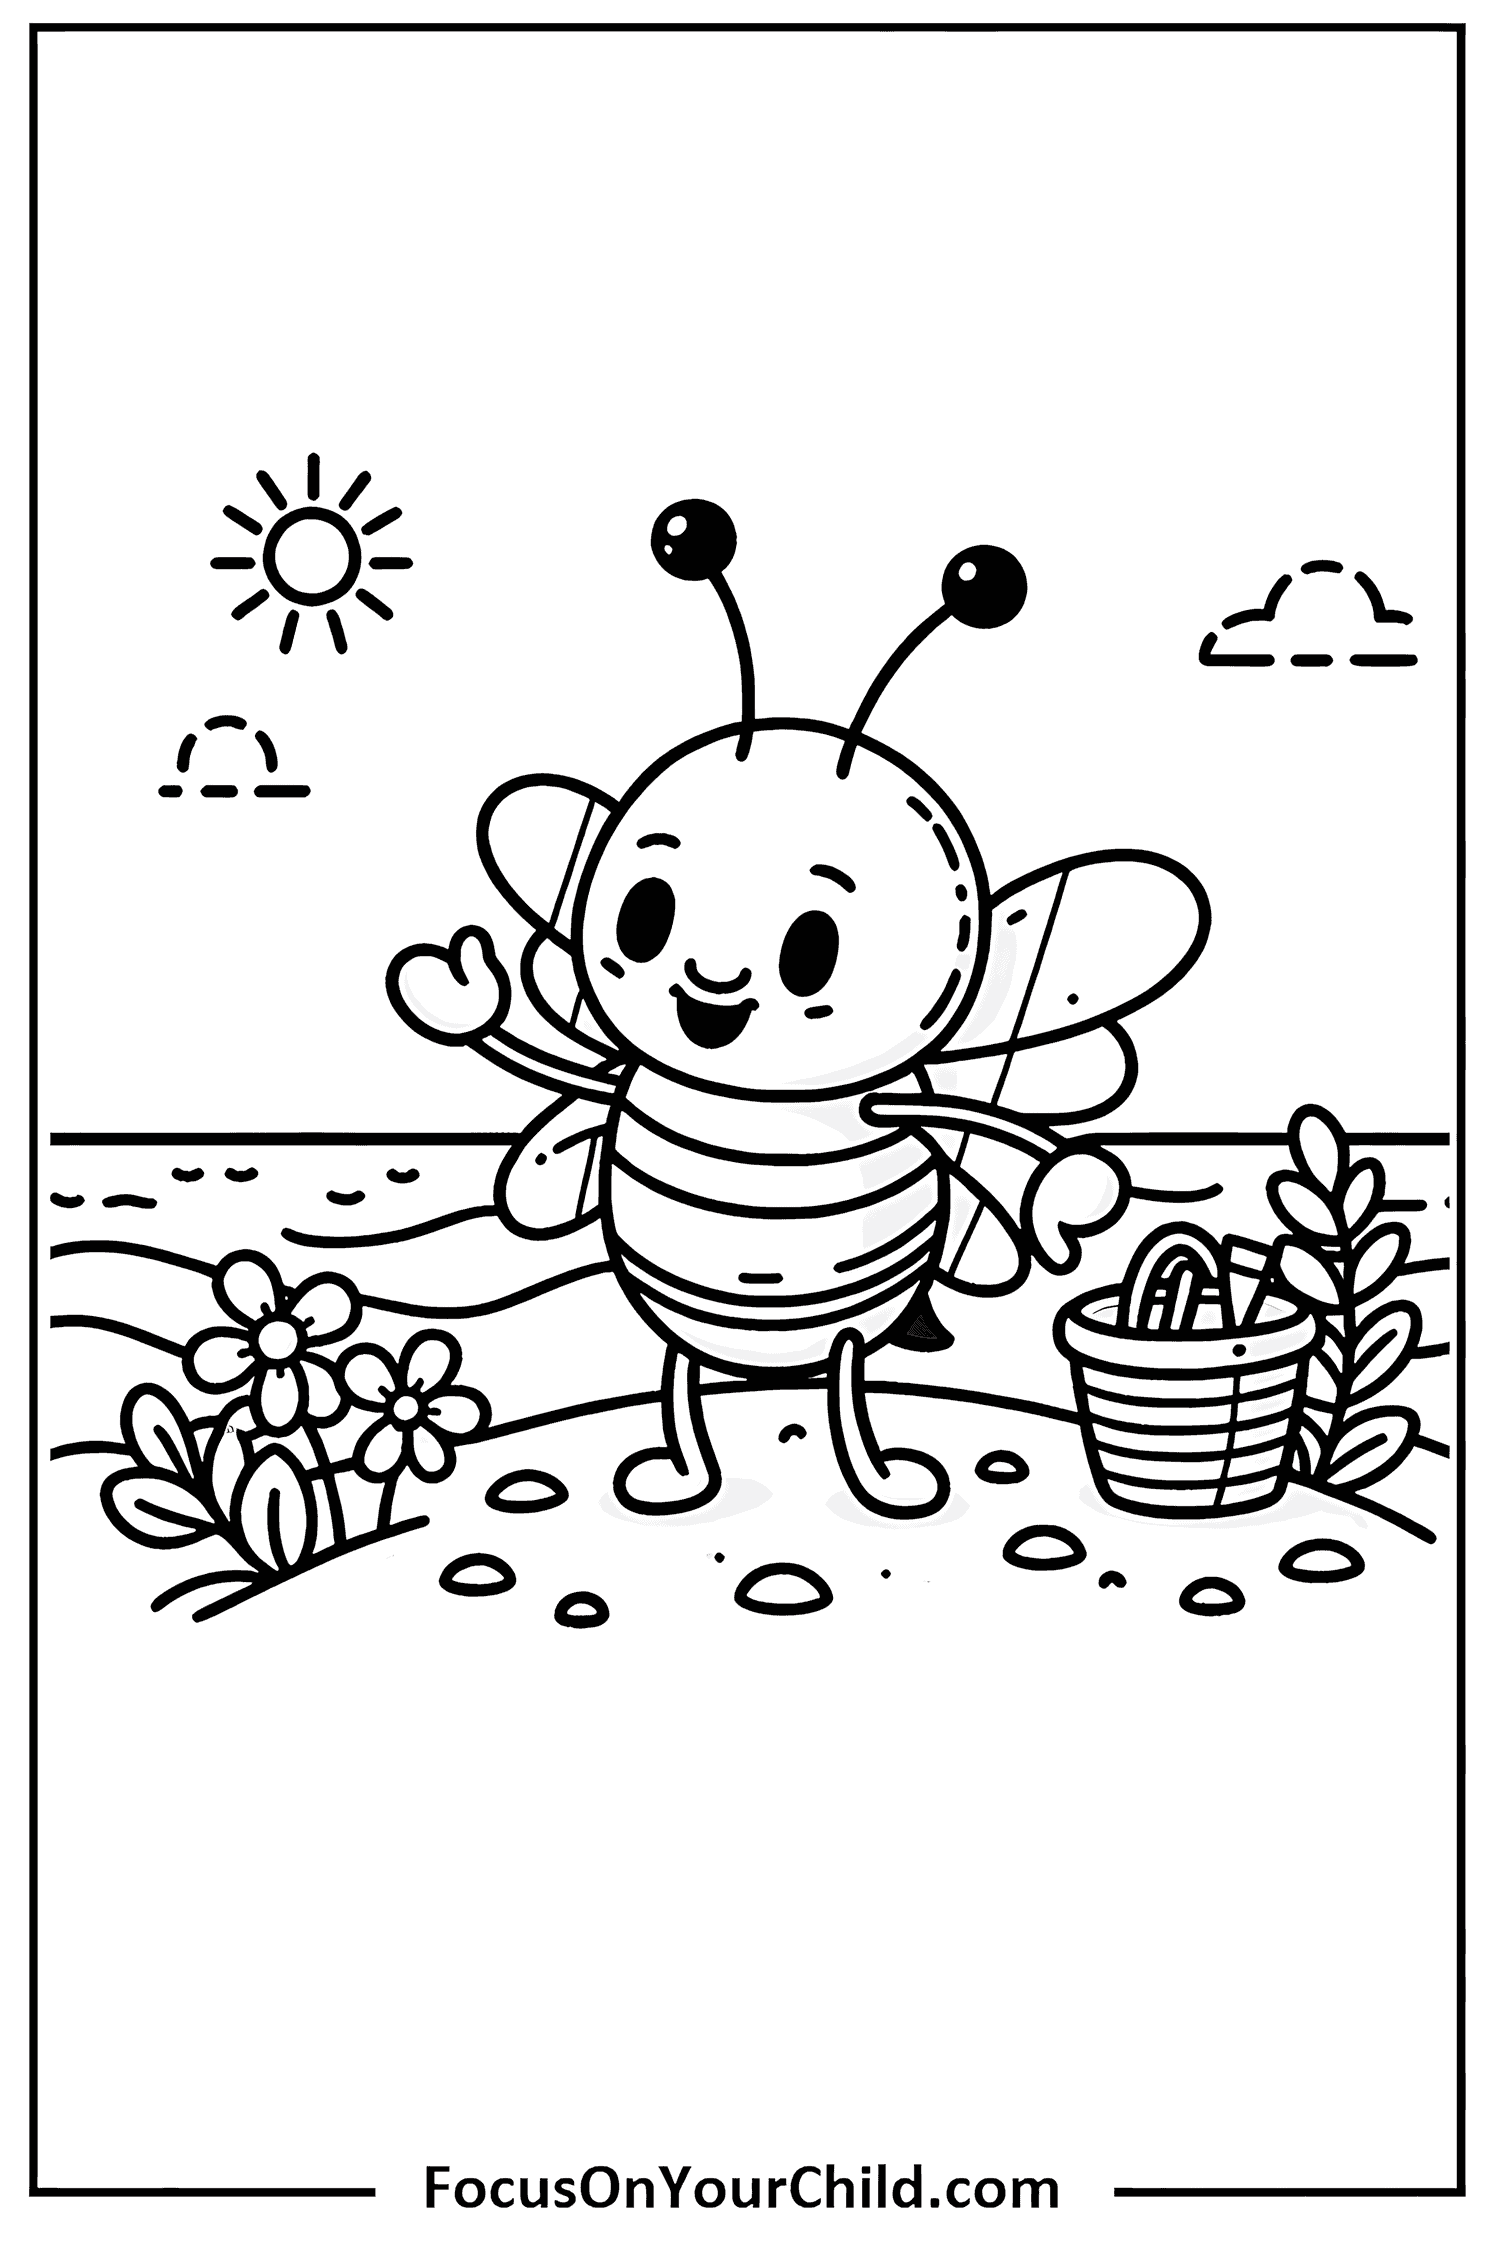 Cheerful cartoon bee enjoying a sunny day in a garden.